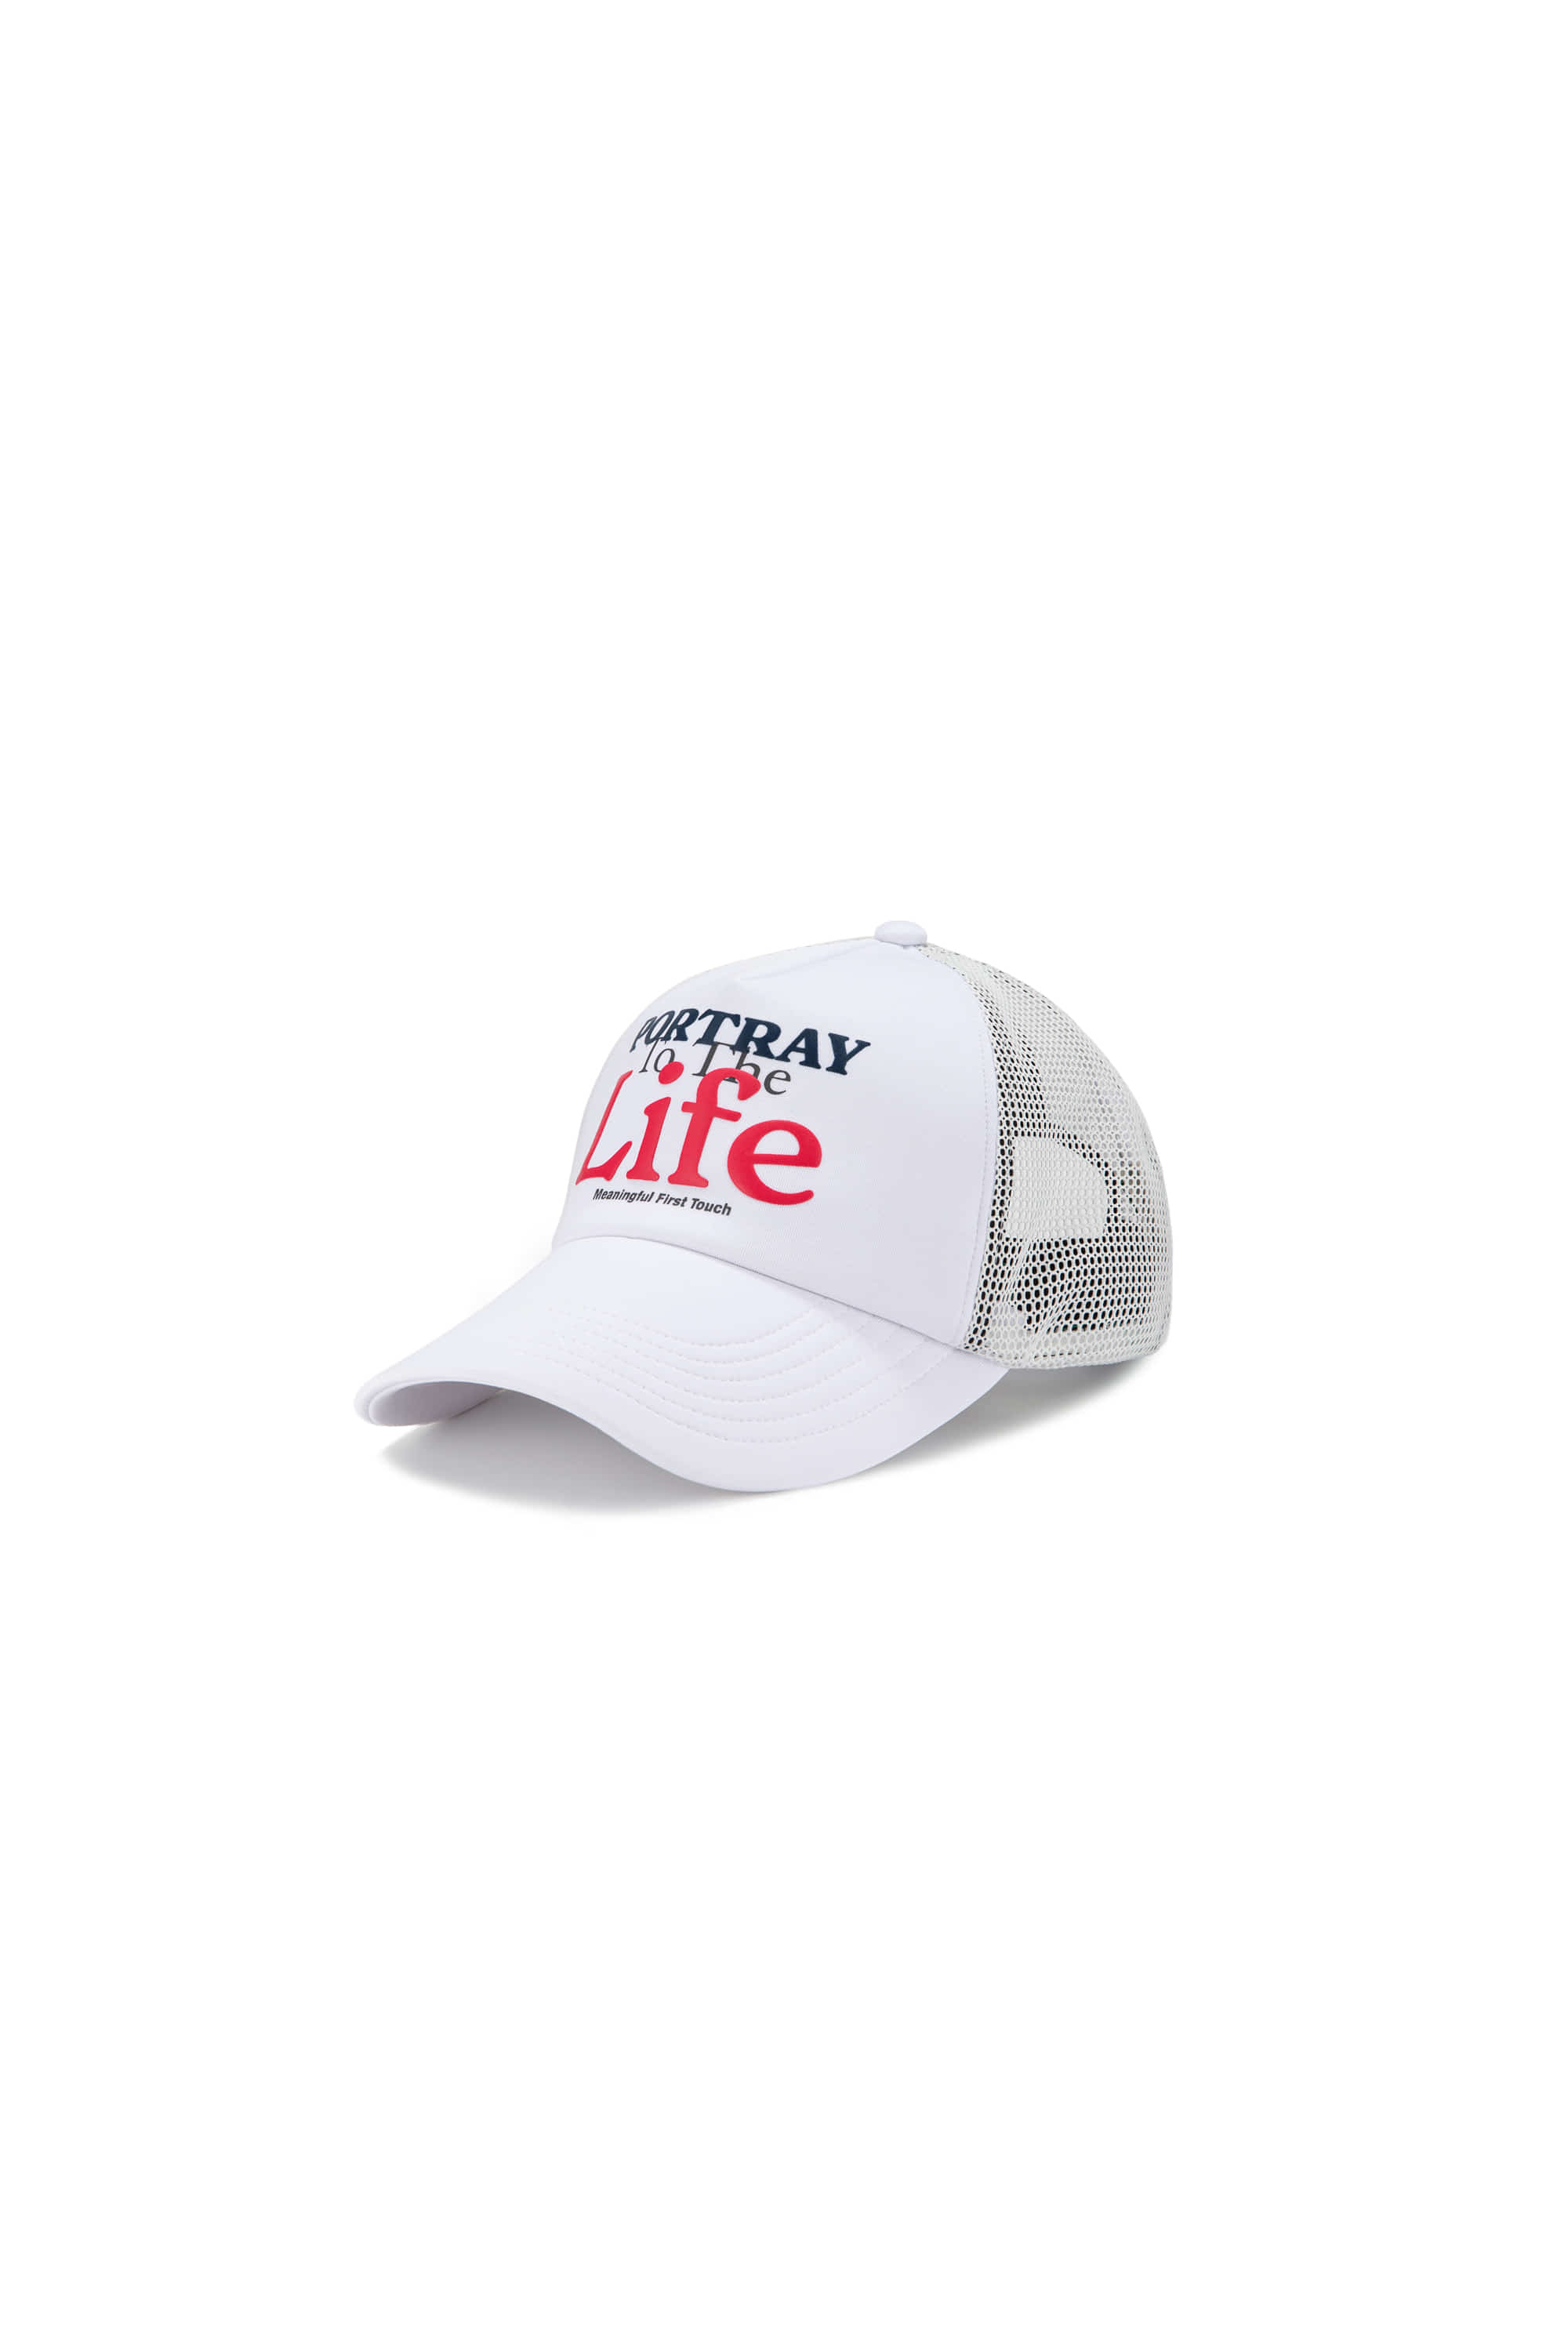 LIFE TRUCKER CAP - WHITE